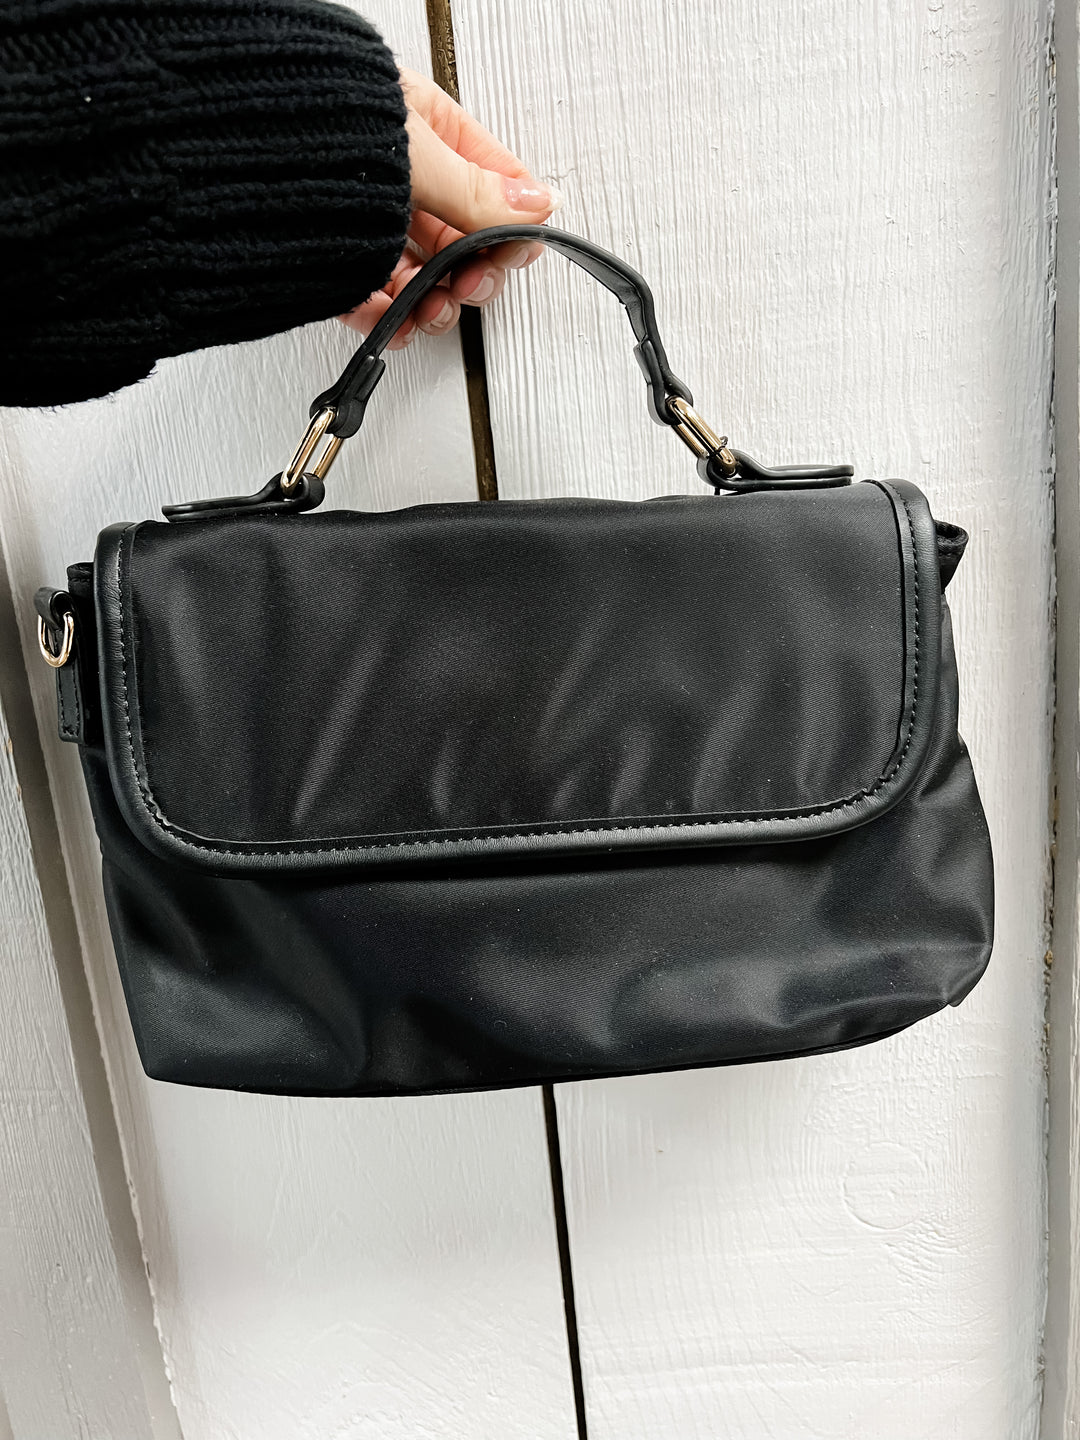 Black Nylon Top Handle Bag w/ Strap - The Teal Antler Boutique